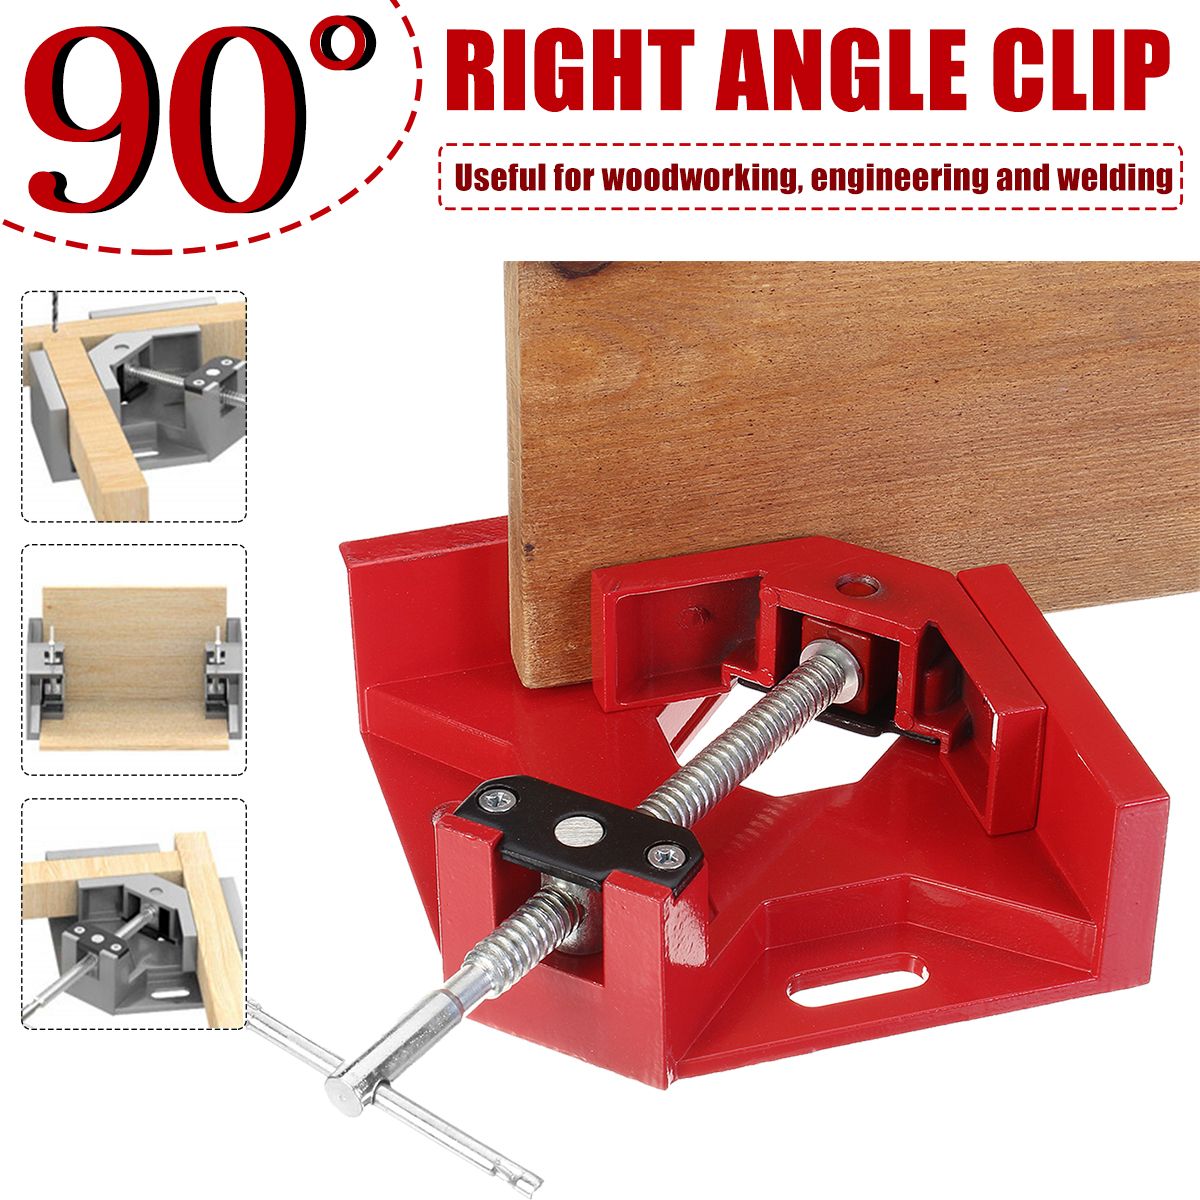 Drillpro-90-Degree-Corner-Right-Angle-Clamp-T-Handle-Vice-Grip-Woodworking-Quick-Fixture-Aluminum-Al-1722539